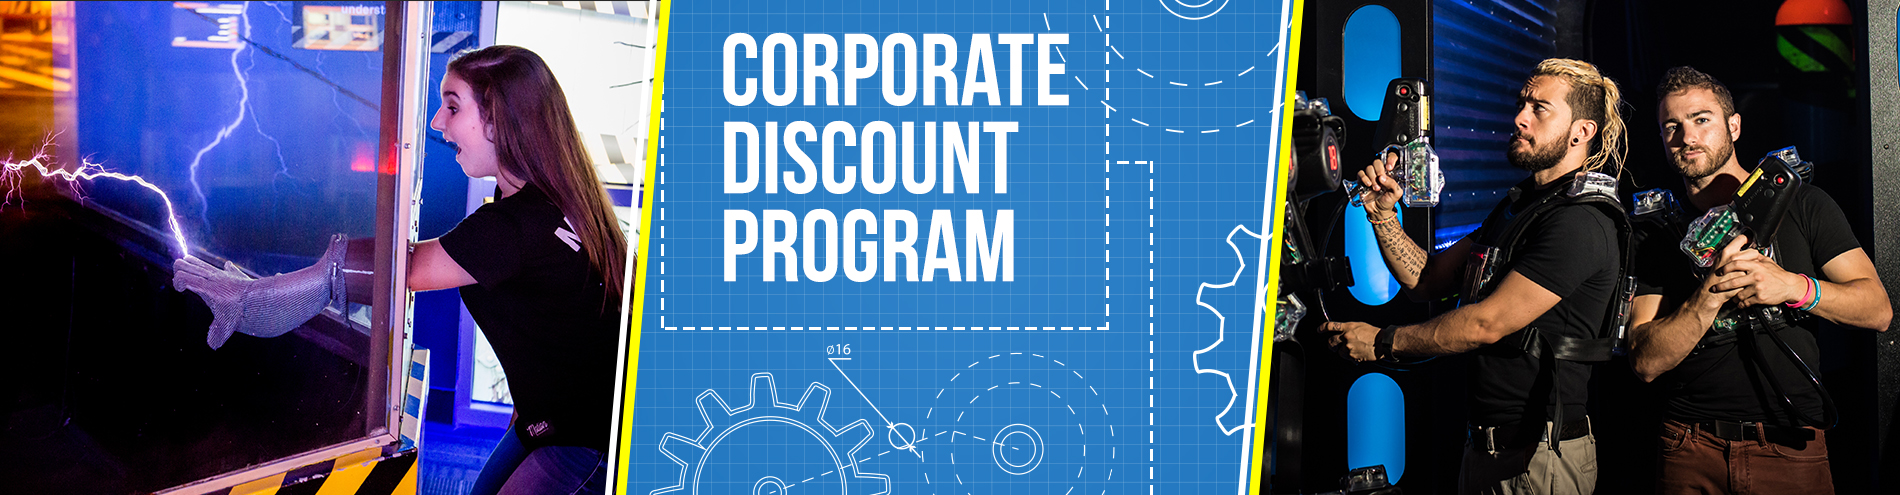 Corporate Discount Program Header